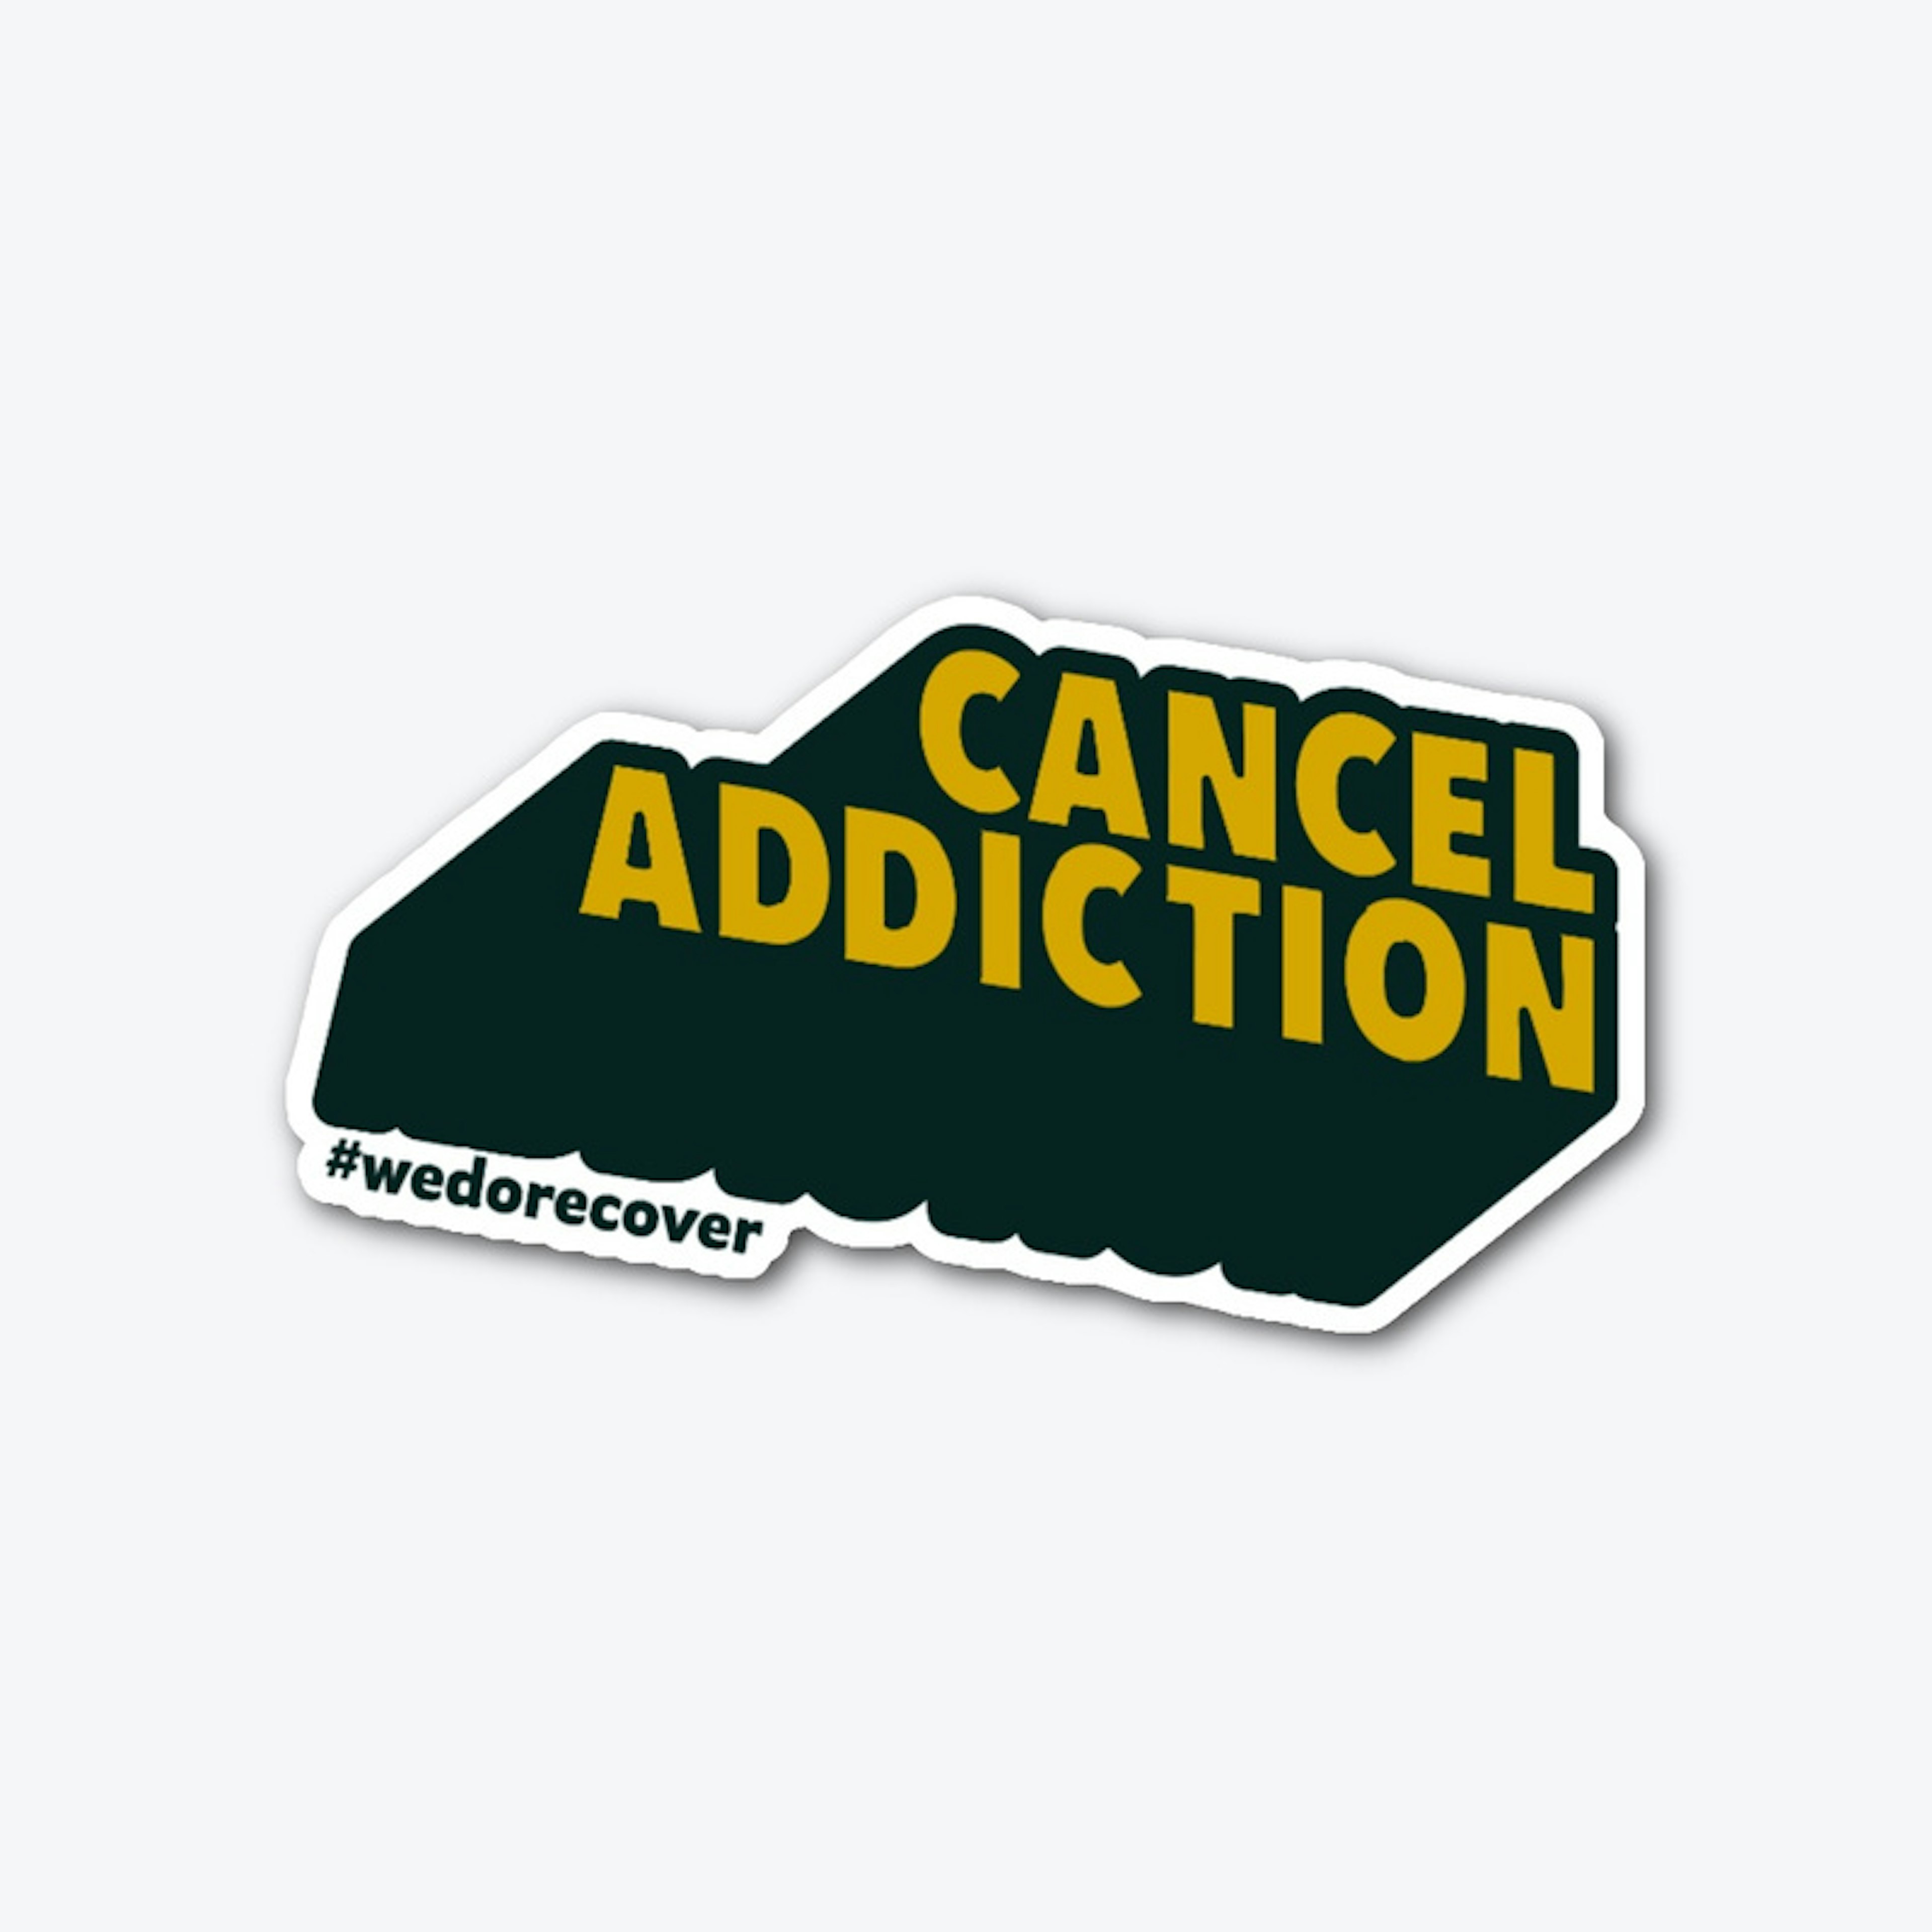 "Let's Cancel Addiction" Isometric Quote